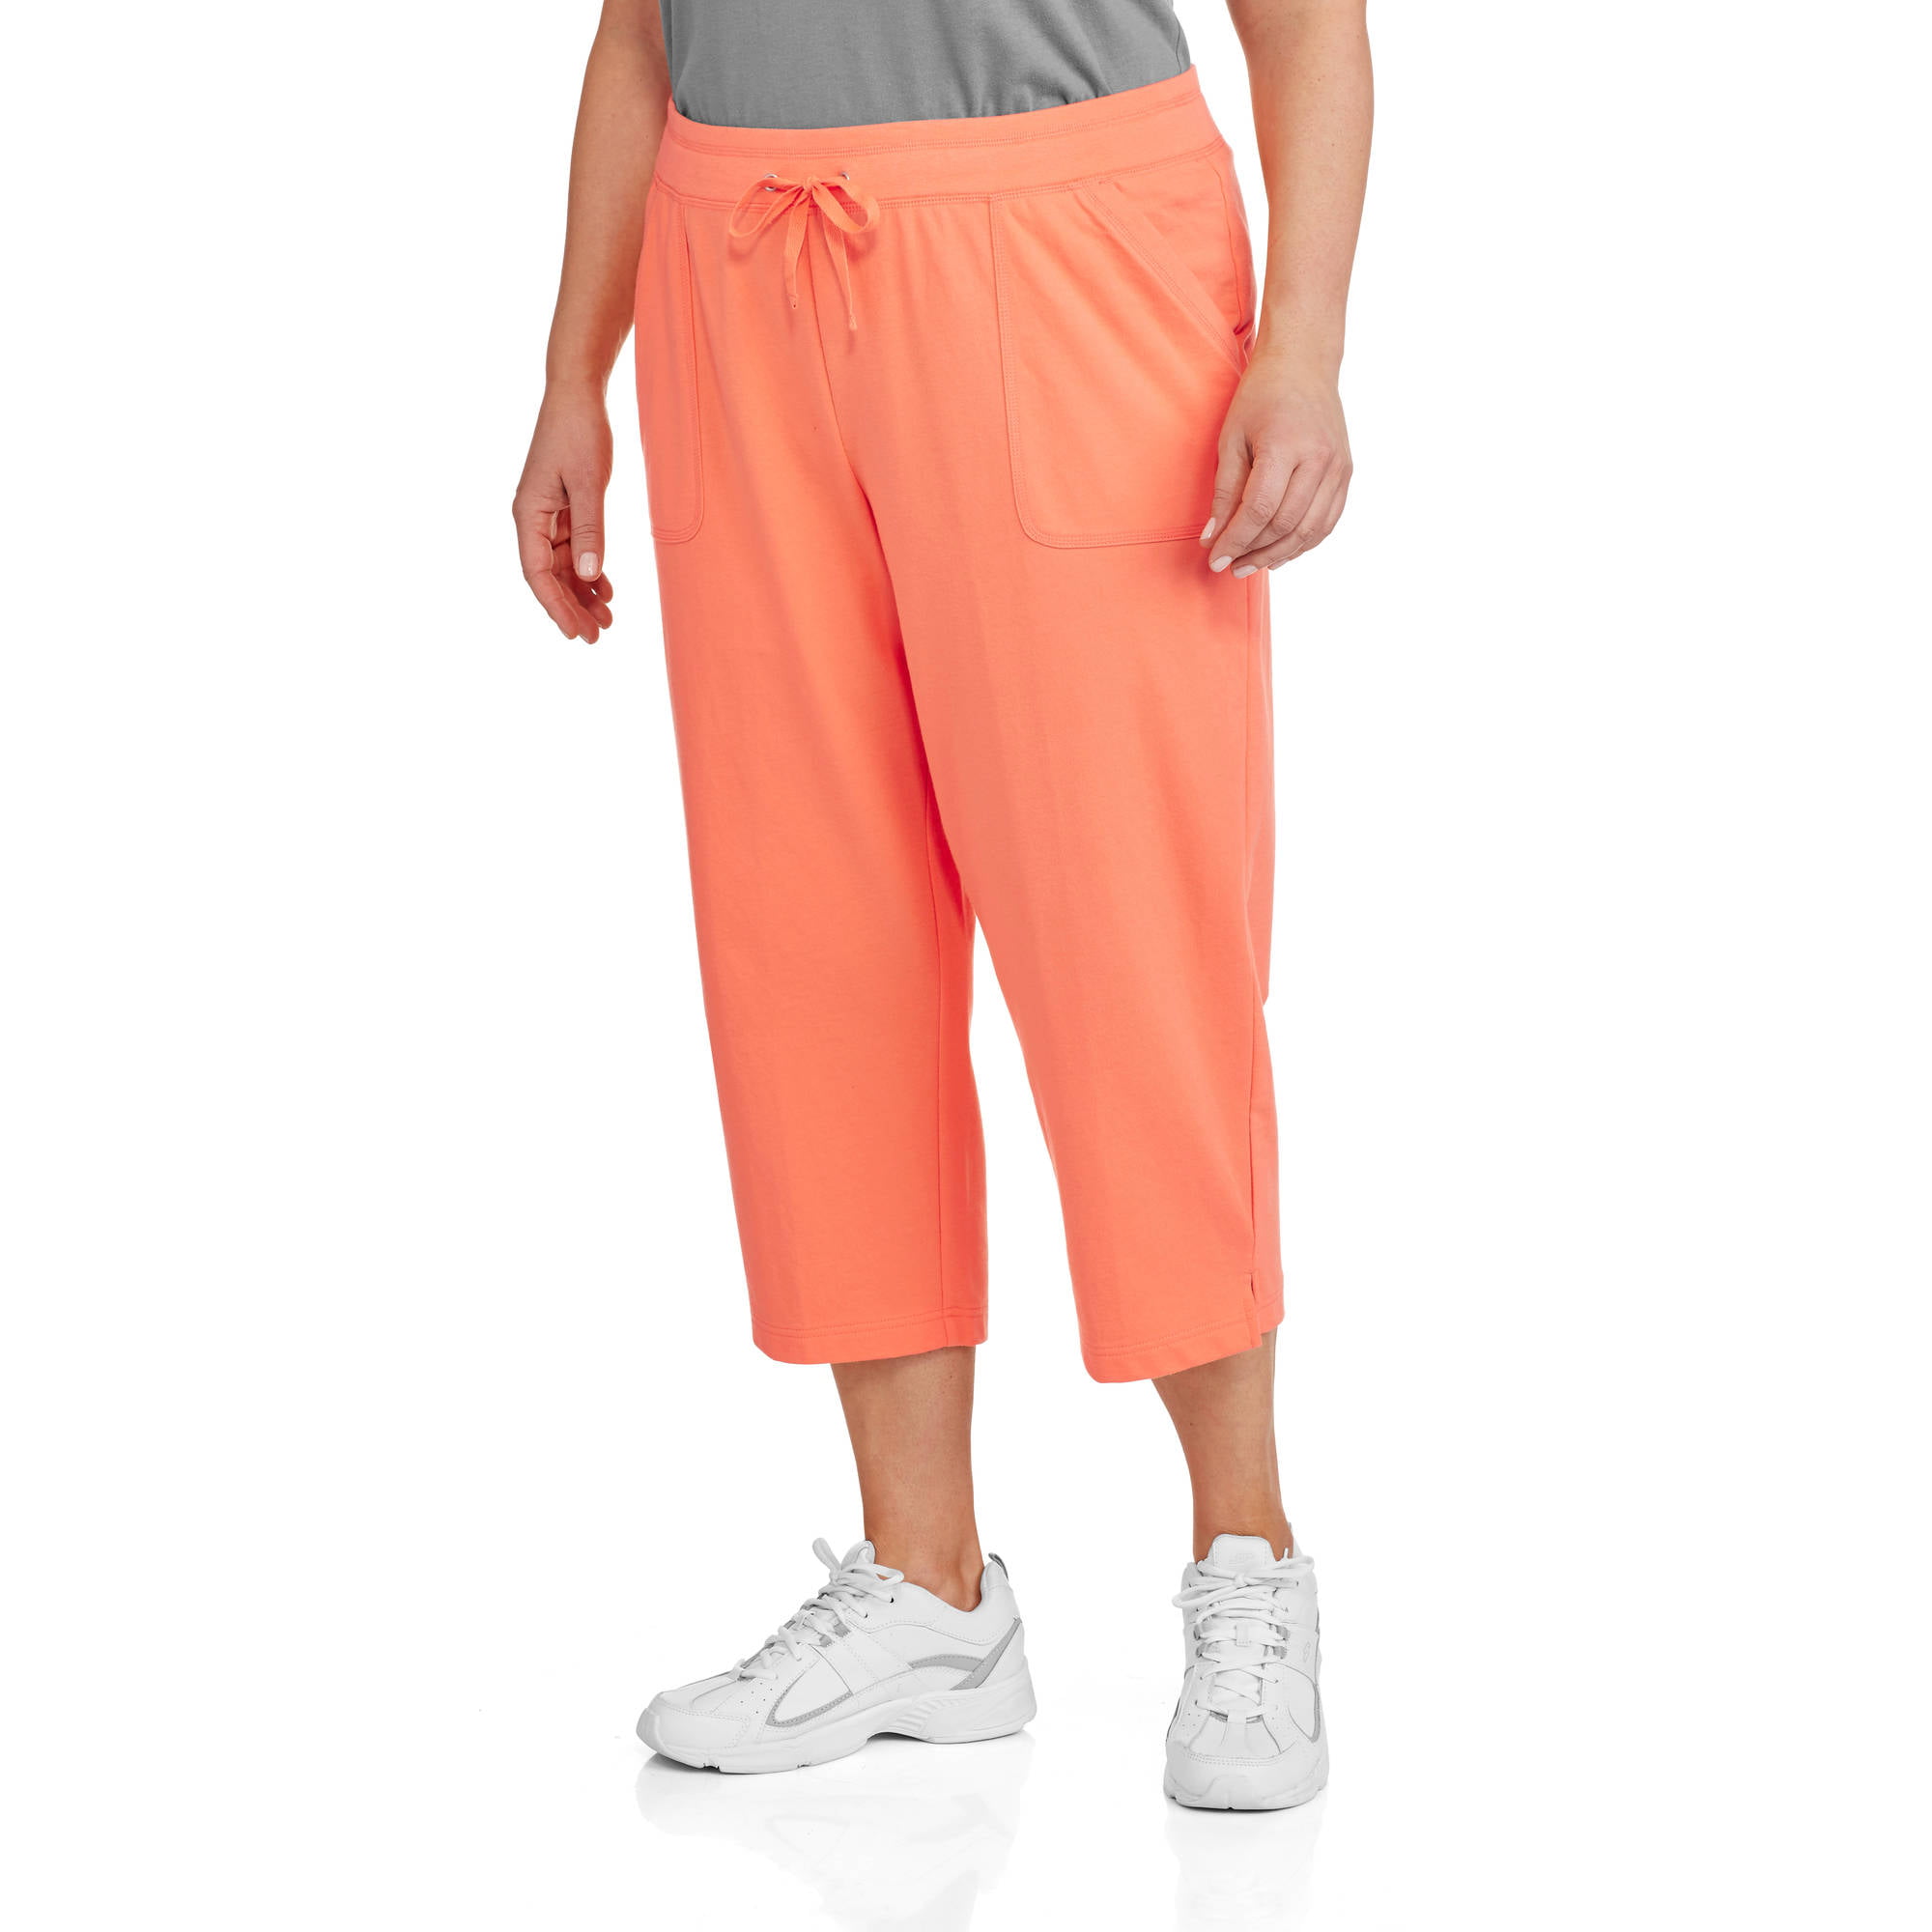 Women's Plus Size Knit Capri Pants, up to size 4X - Walmart.com